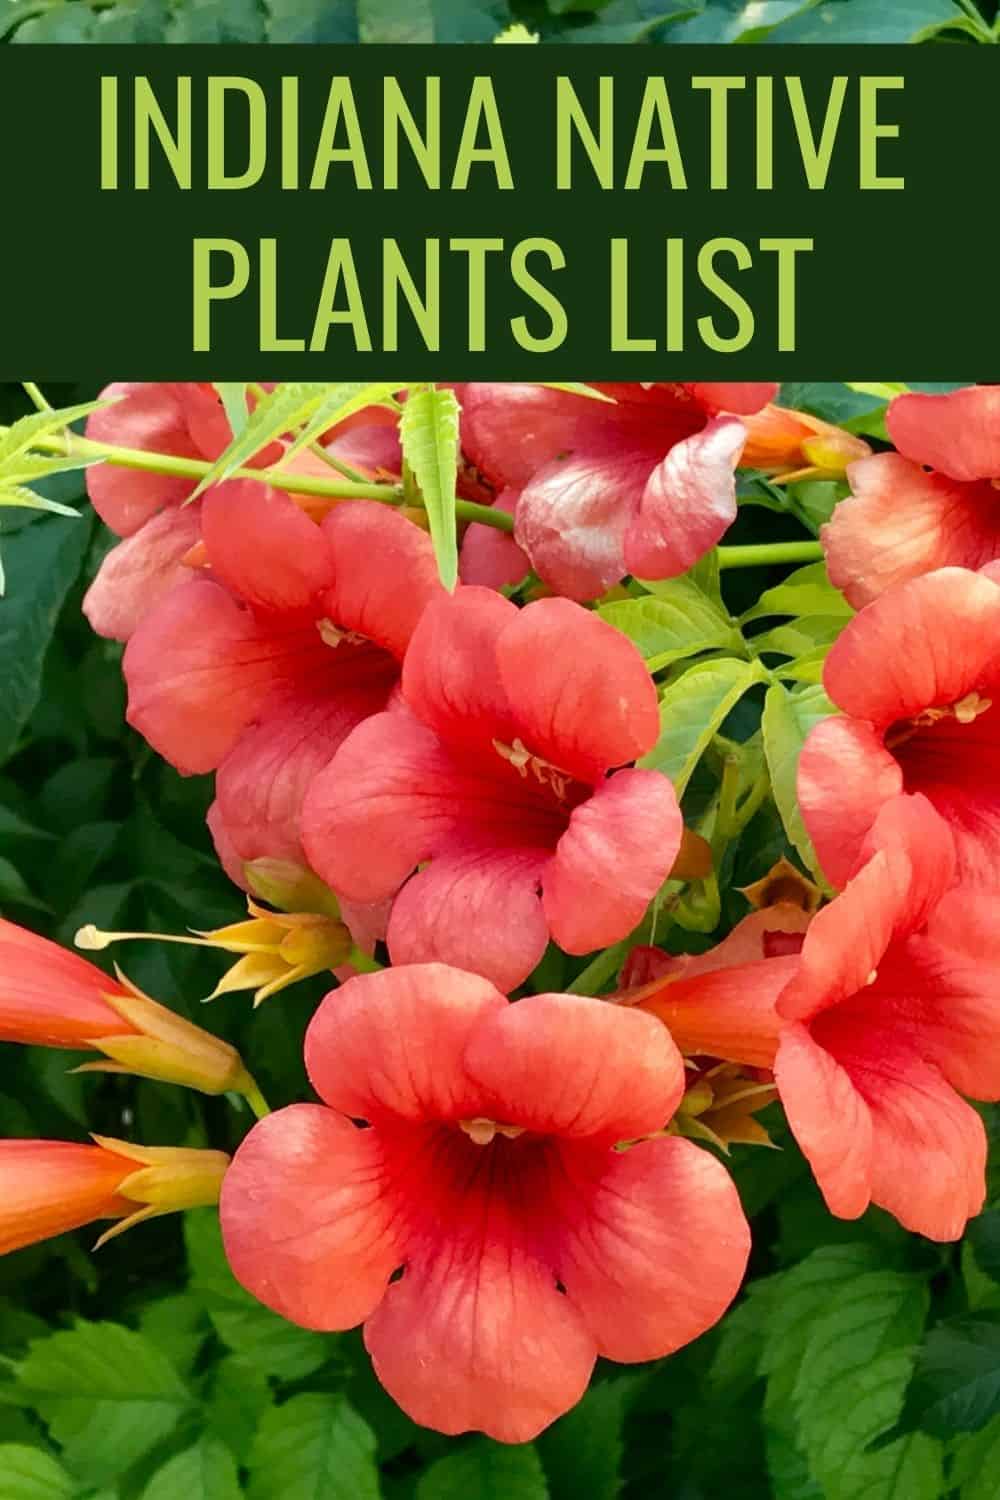 Indiana native plants list